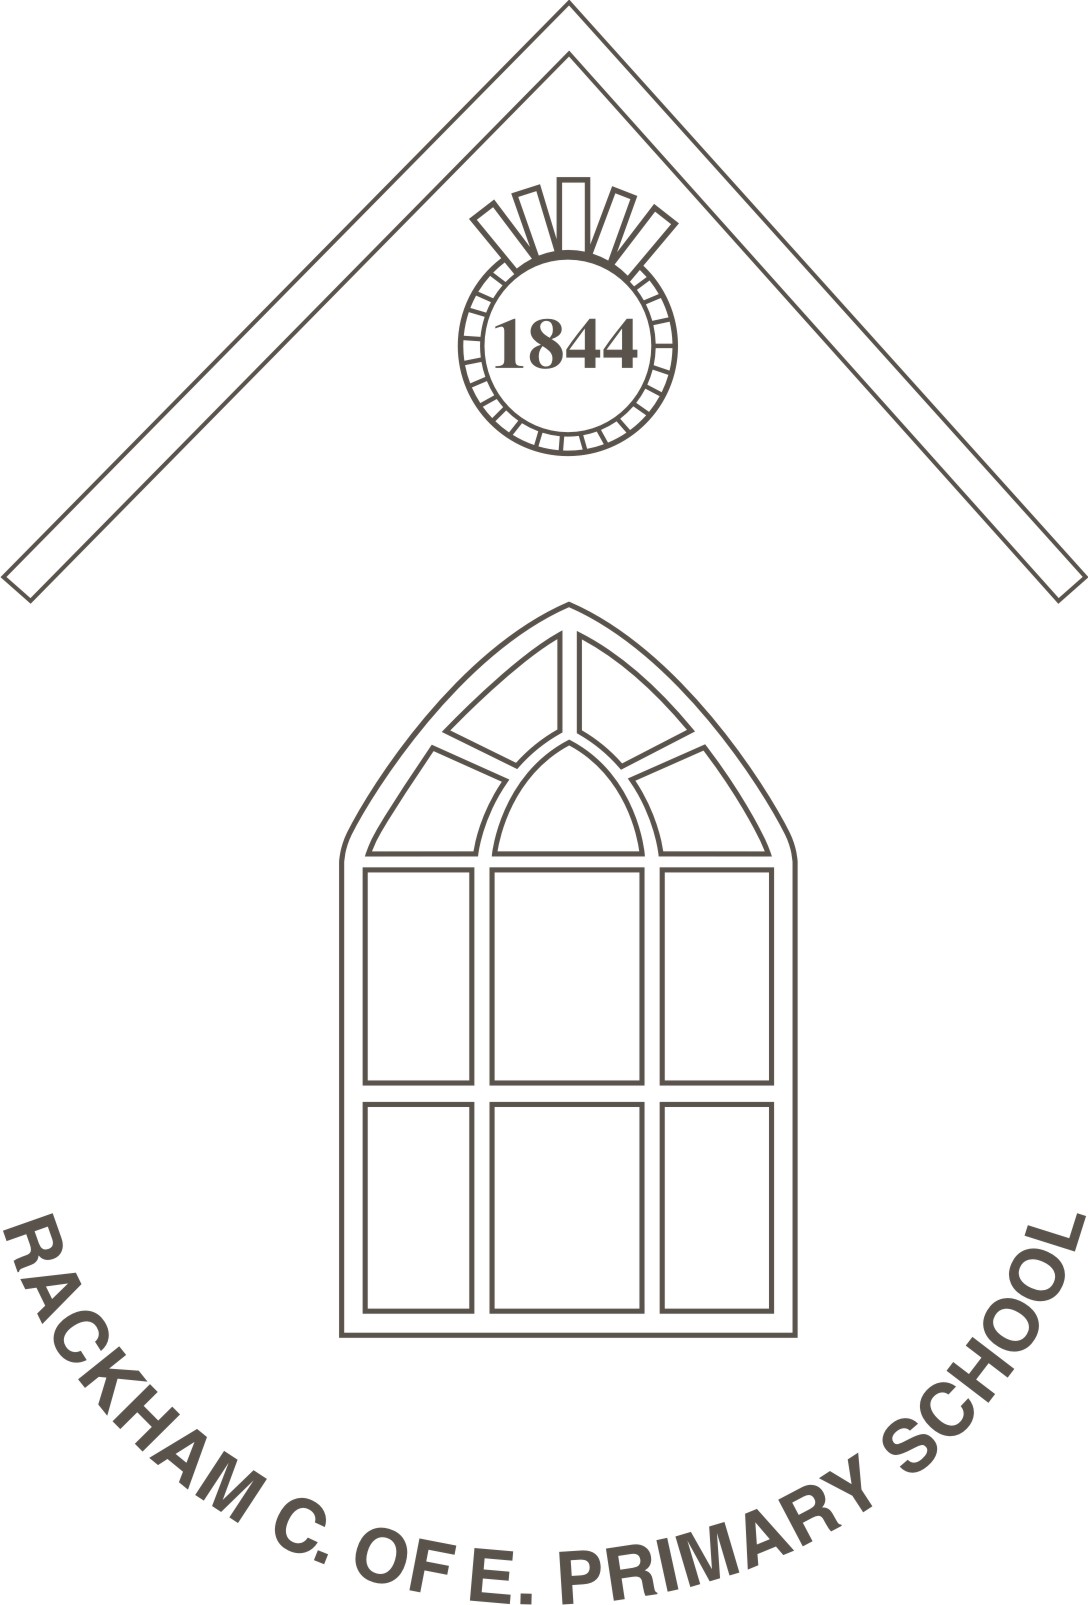 The Rackham Church of England Primary School